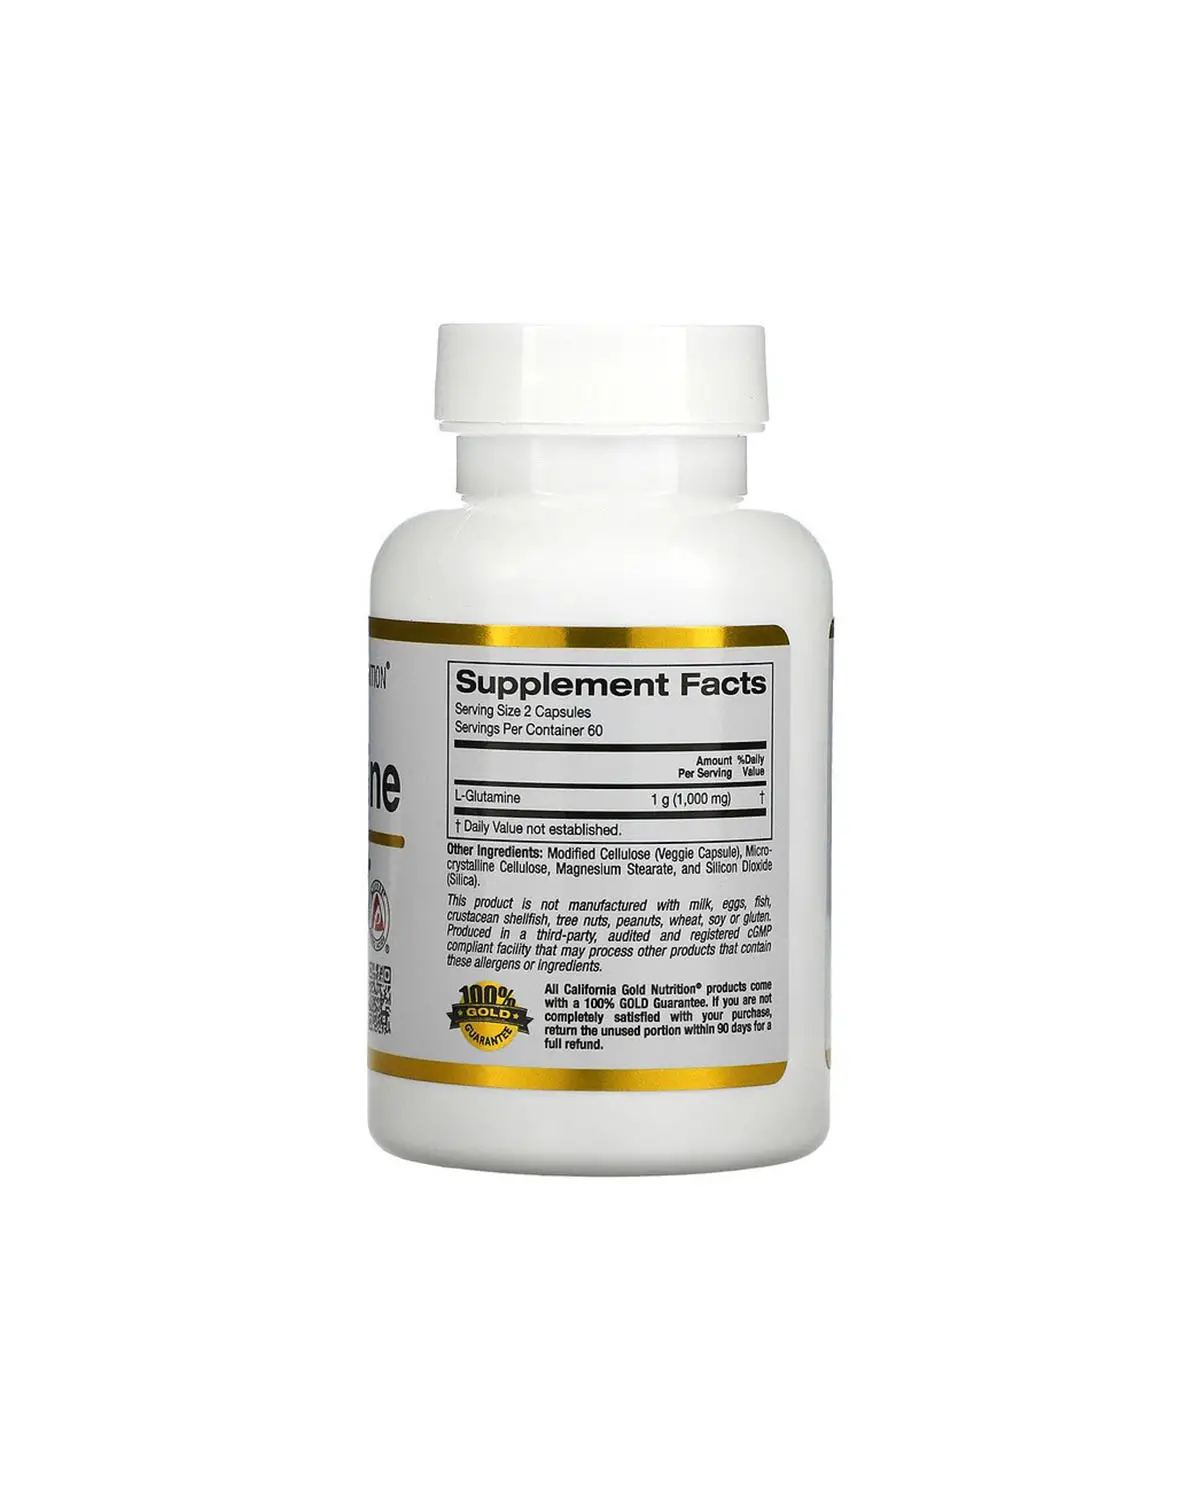 L-глутамин |  120 кап California Gold Nutrition